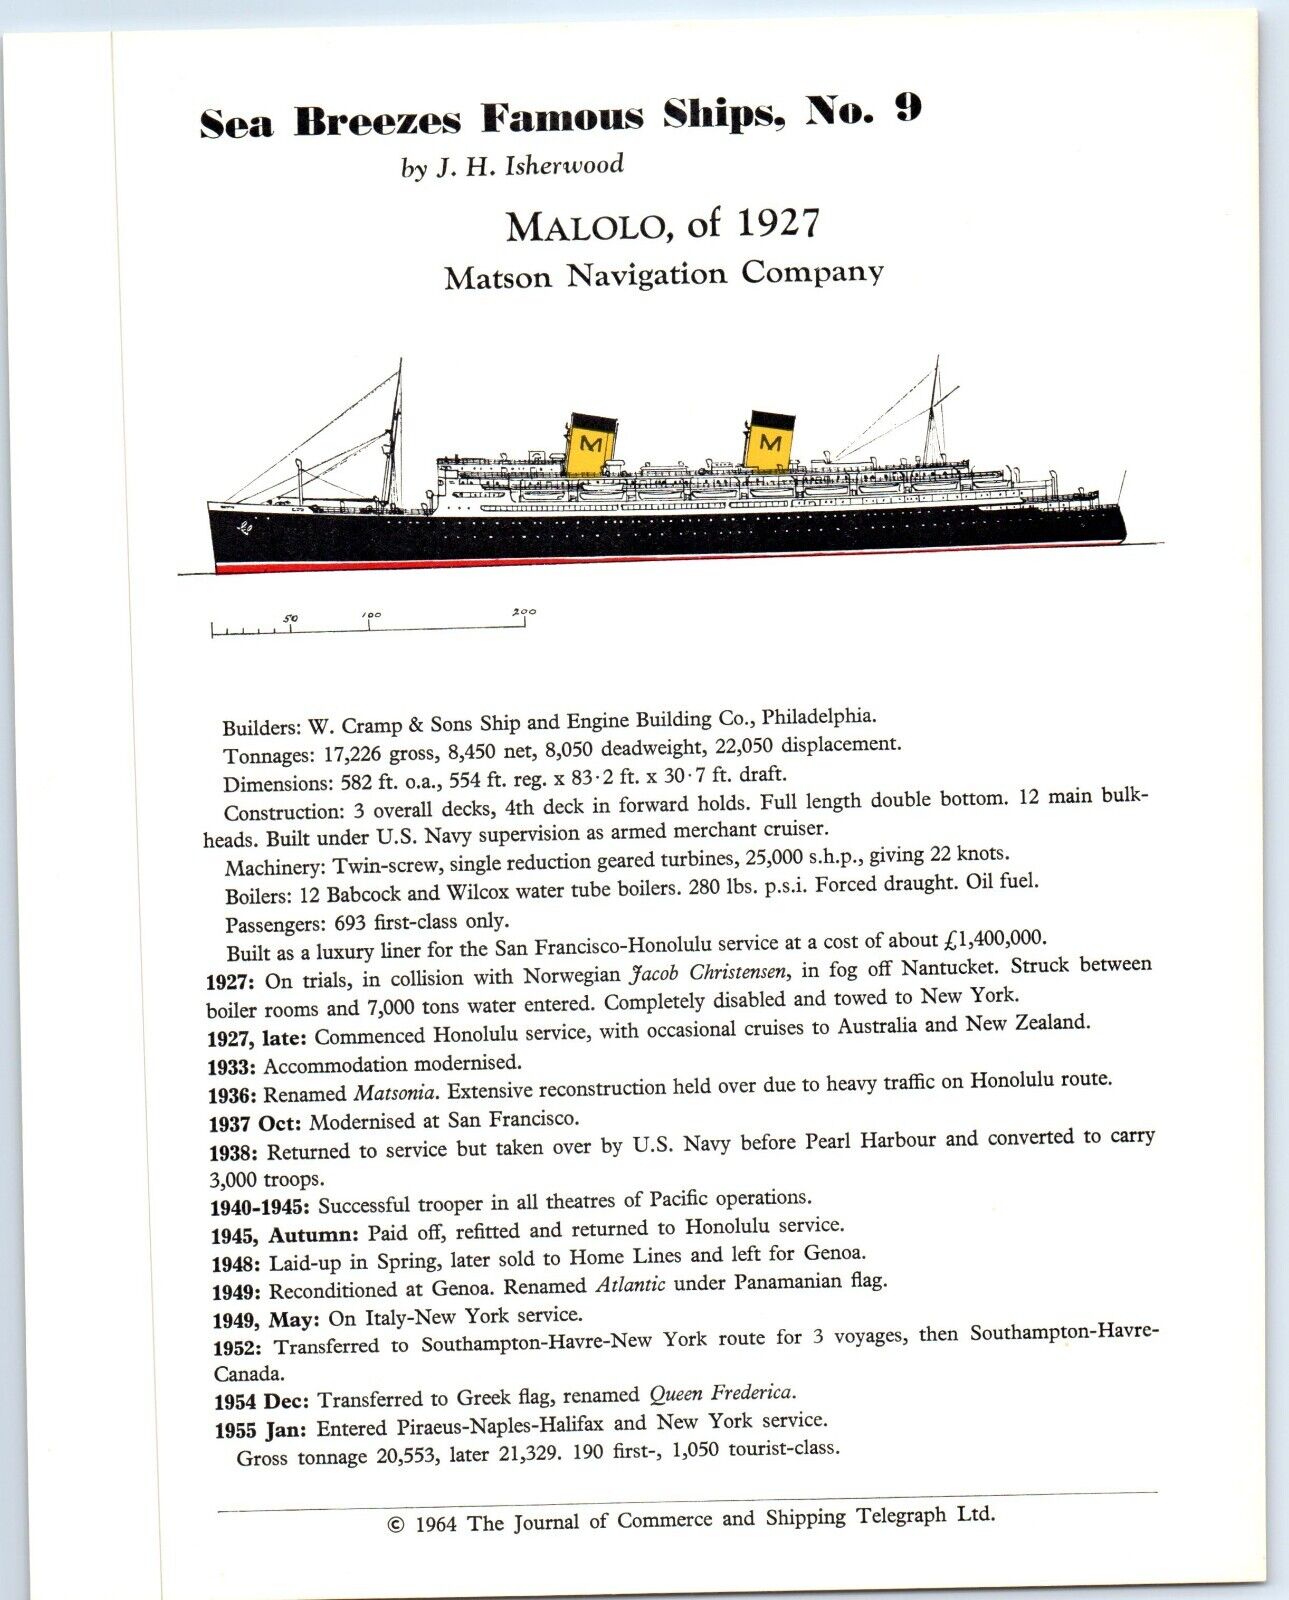 SS MALOLO (1927) Sea Breezes Famous Ships No. 9 History/ Data Sheet 1963